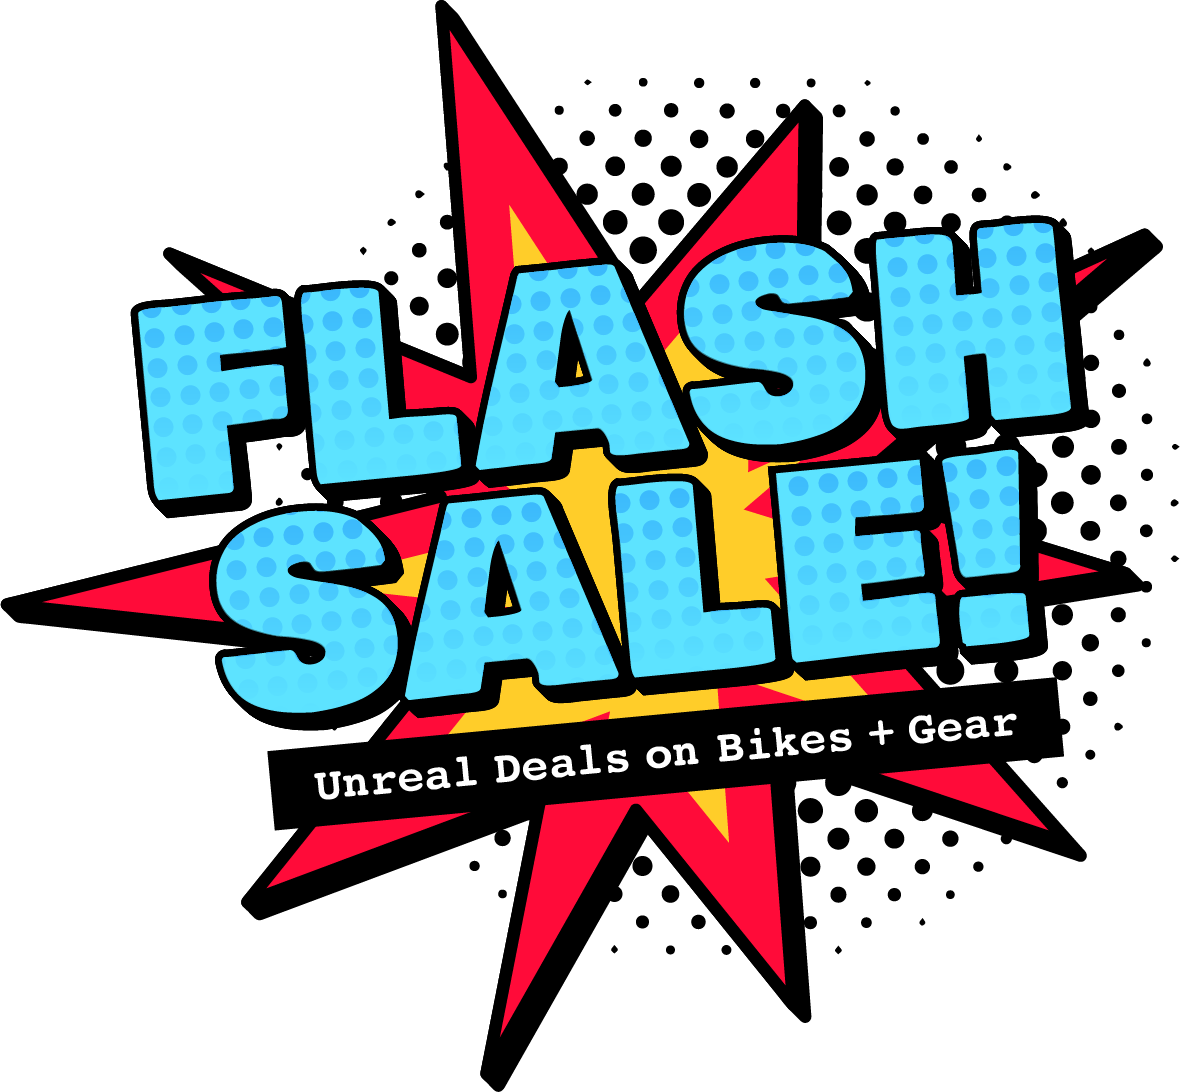 Flash Sale! Unreal Deals on Bikes + Gear